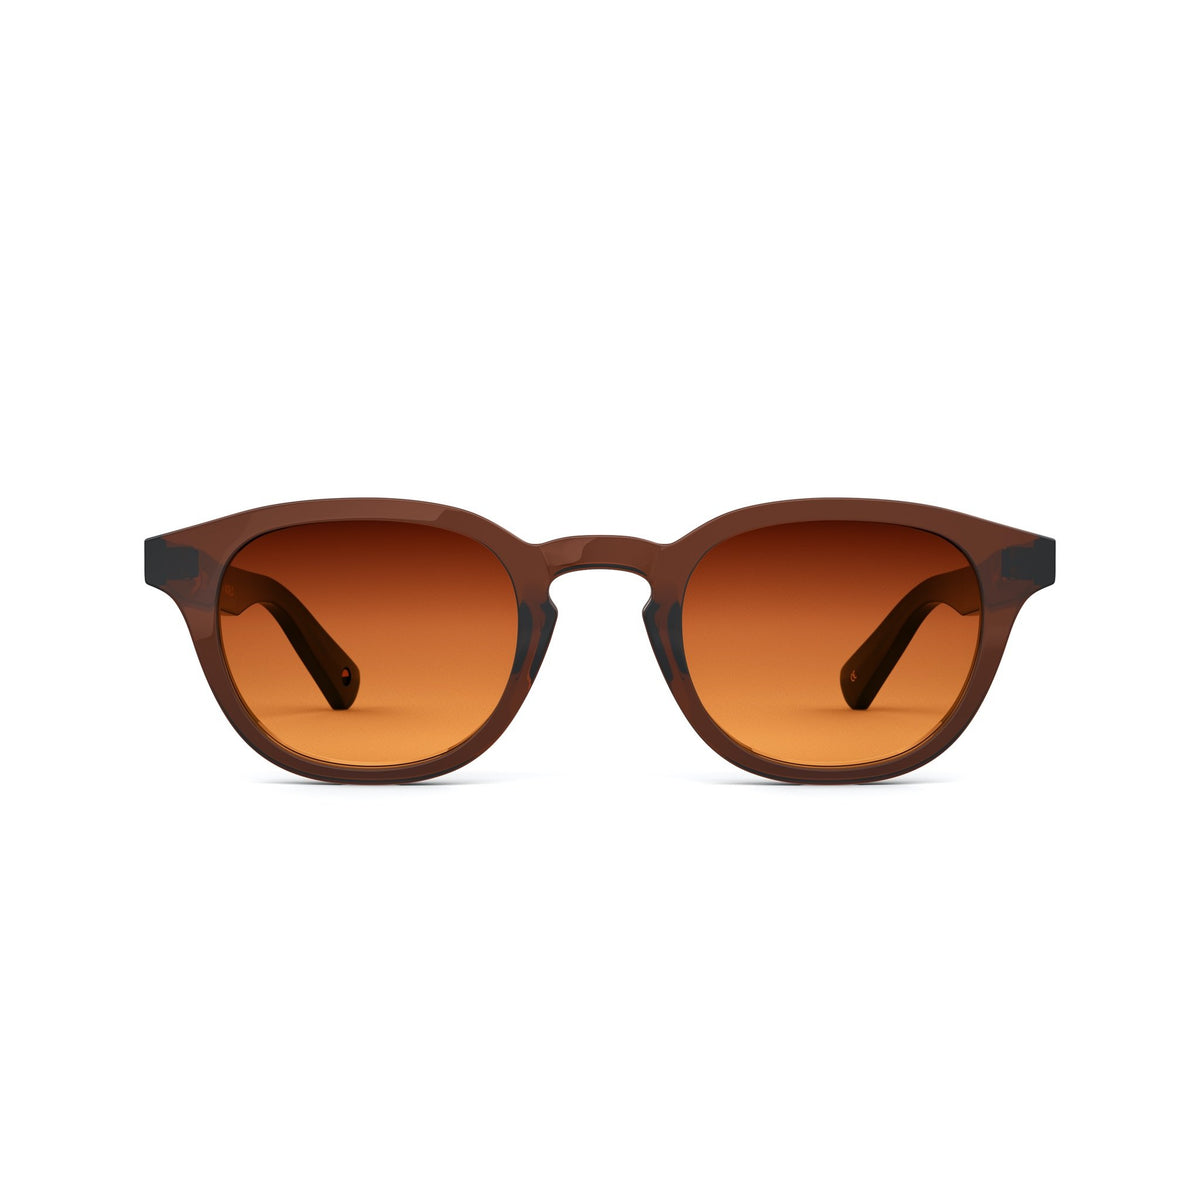 Tens Sunglasses - Dustin Compact Maple